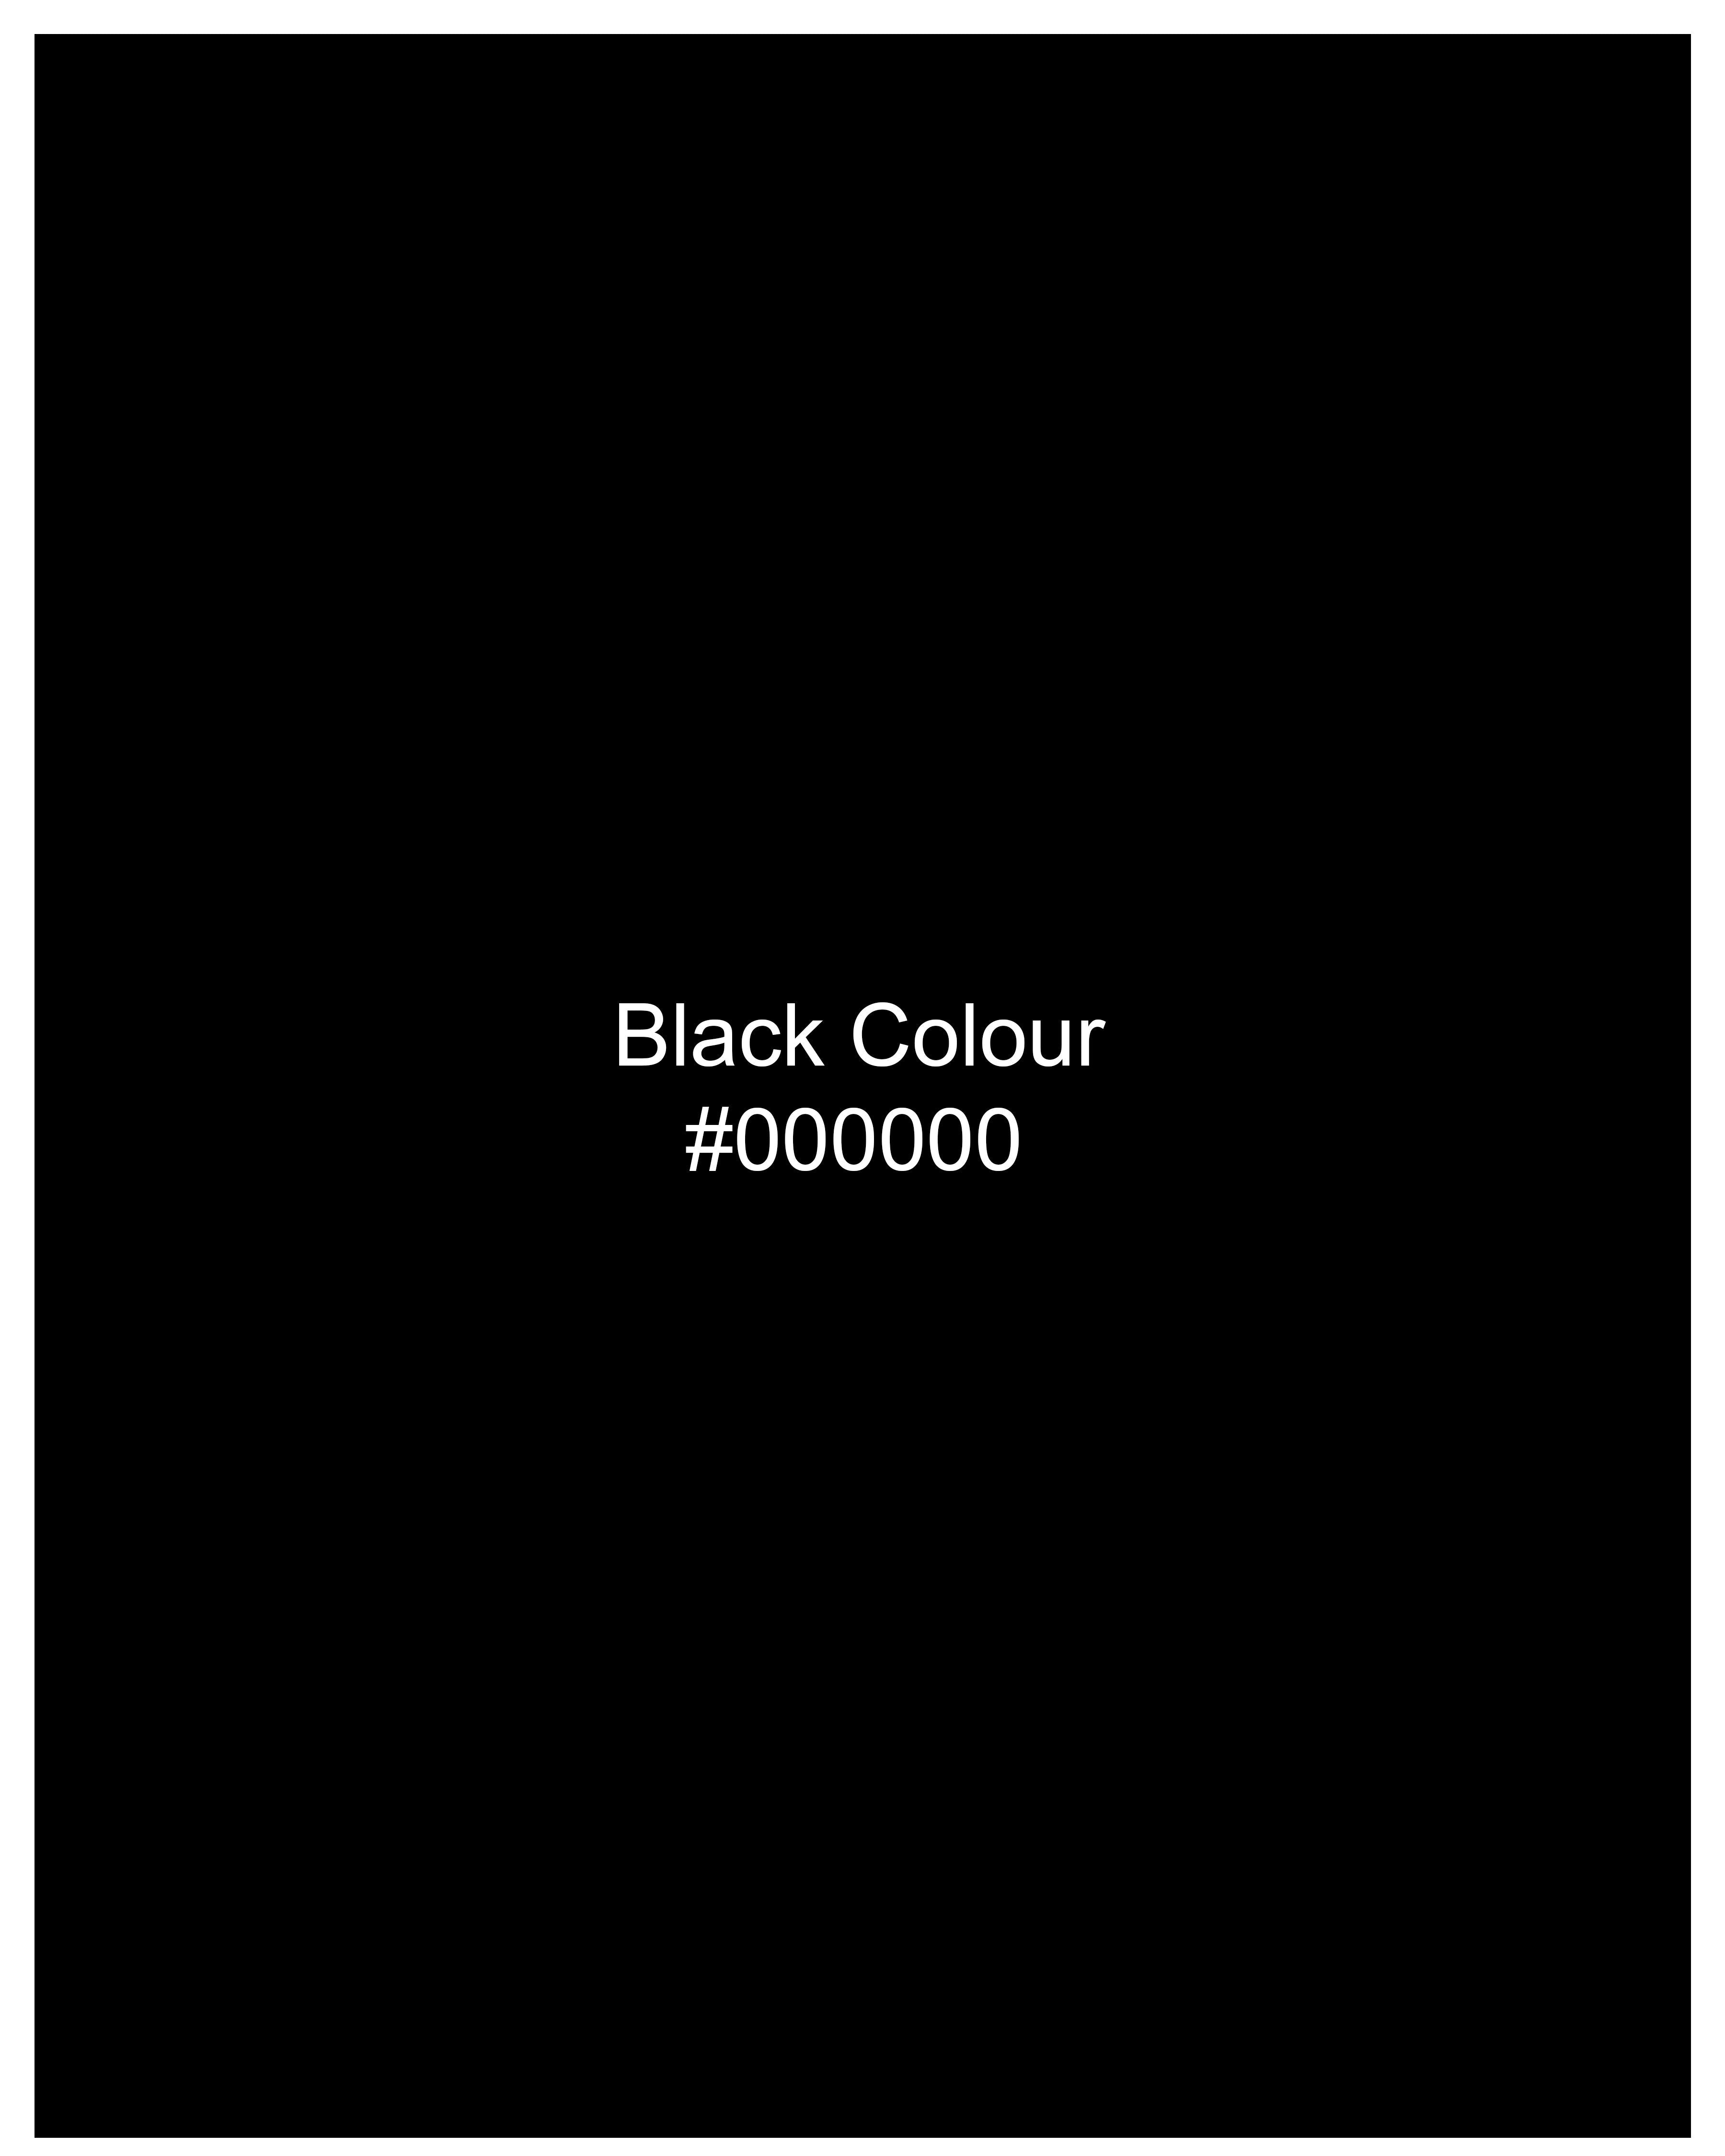 Jade Black Sequins Embroidered Bandhgala Blazer BL2416-BG-36,BL2416-BG-38,BL2416-BG-40,BL2416-BG-42,BL2416-BG-44,BL2416-BG-46,BL2416-BG-48,BL2416-BG-50,BL2416-BG-52,BL2416-BG-54,BL2416-BG-56,BL2416-BG-58,BL2416-BG-60